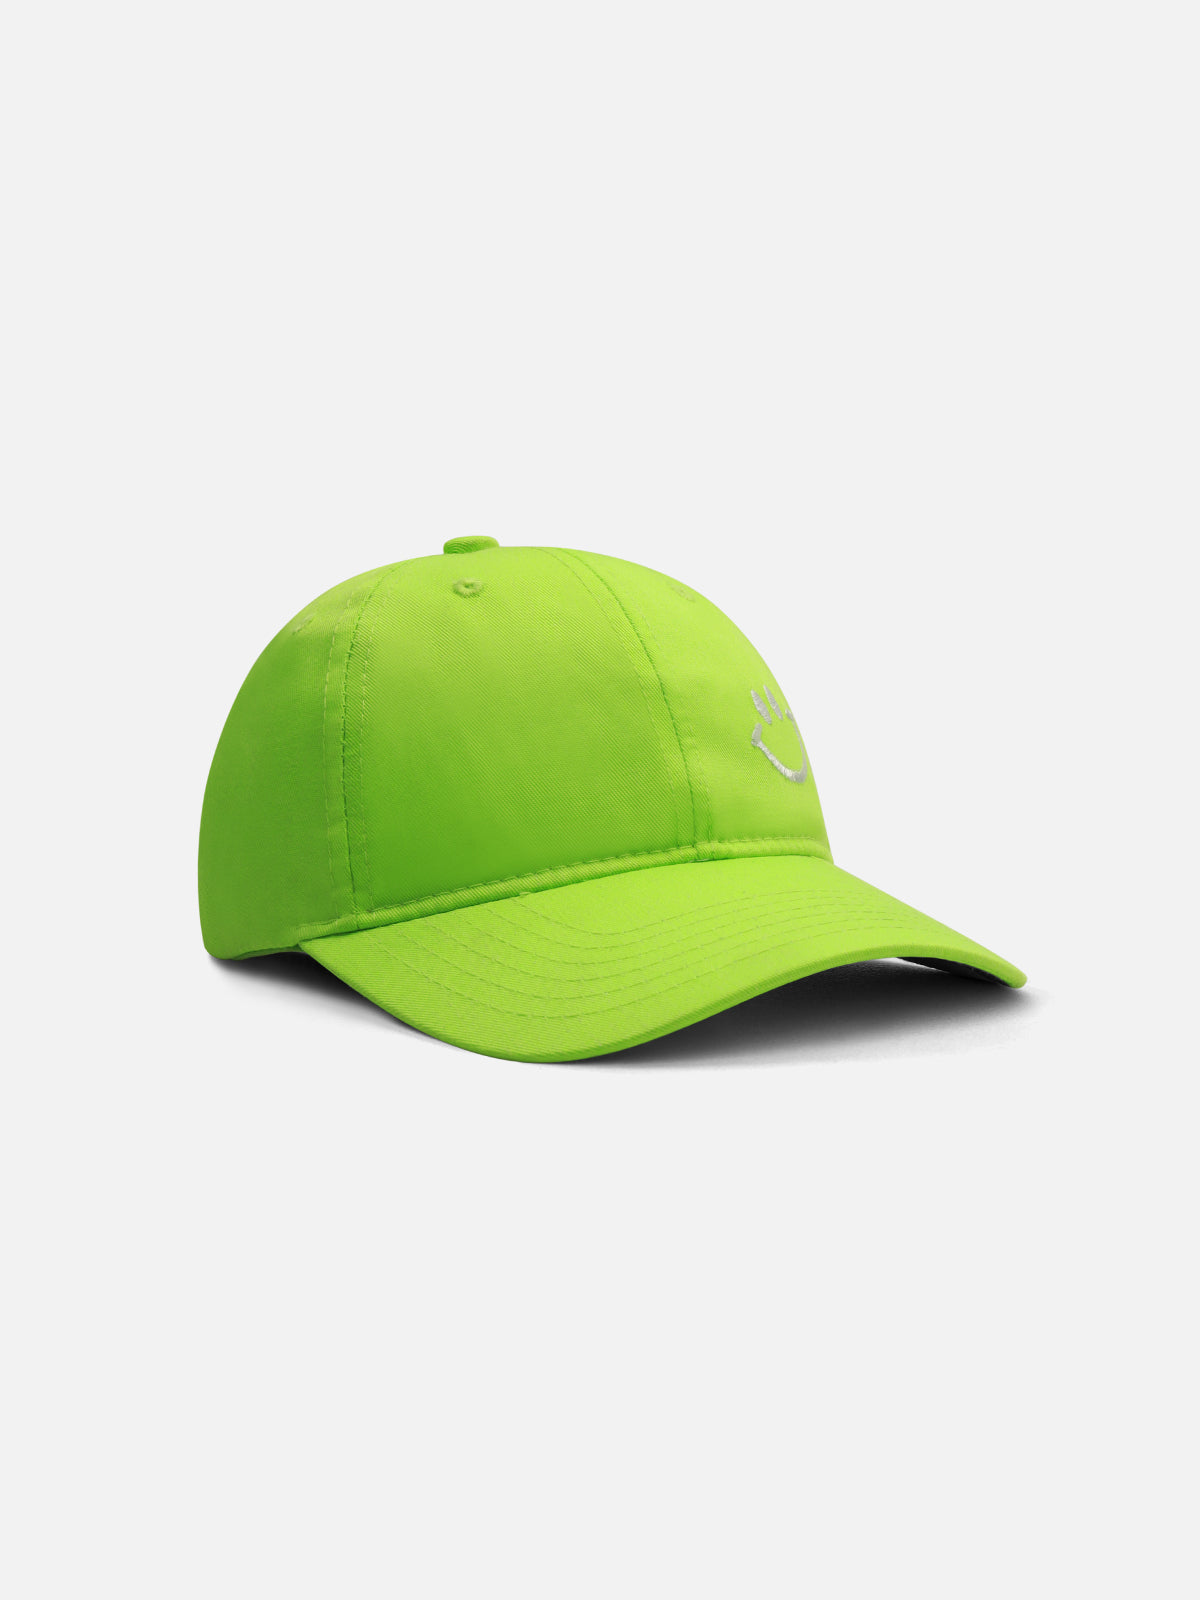 Neon Green Baseball Cap - FWAC23-010